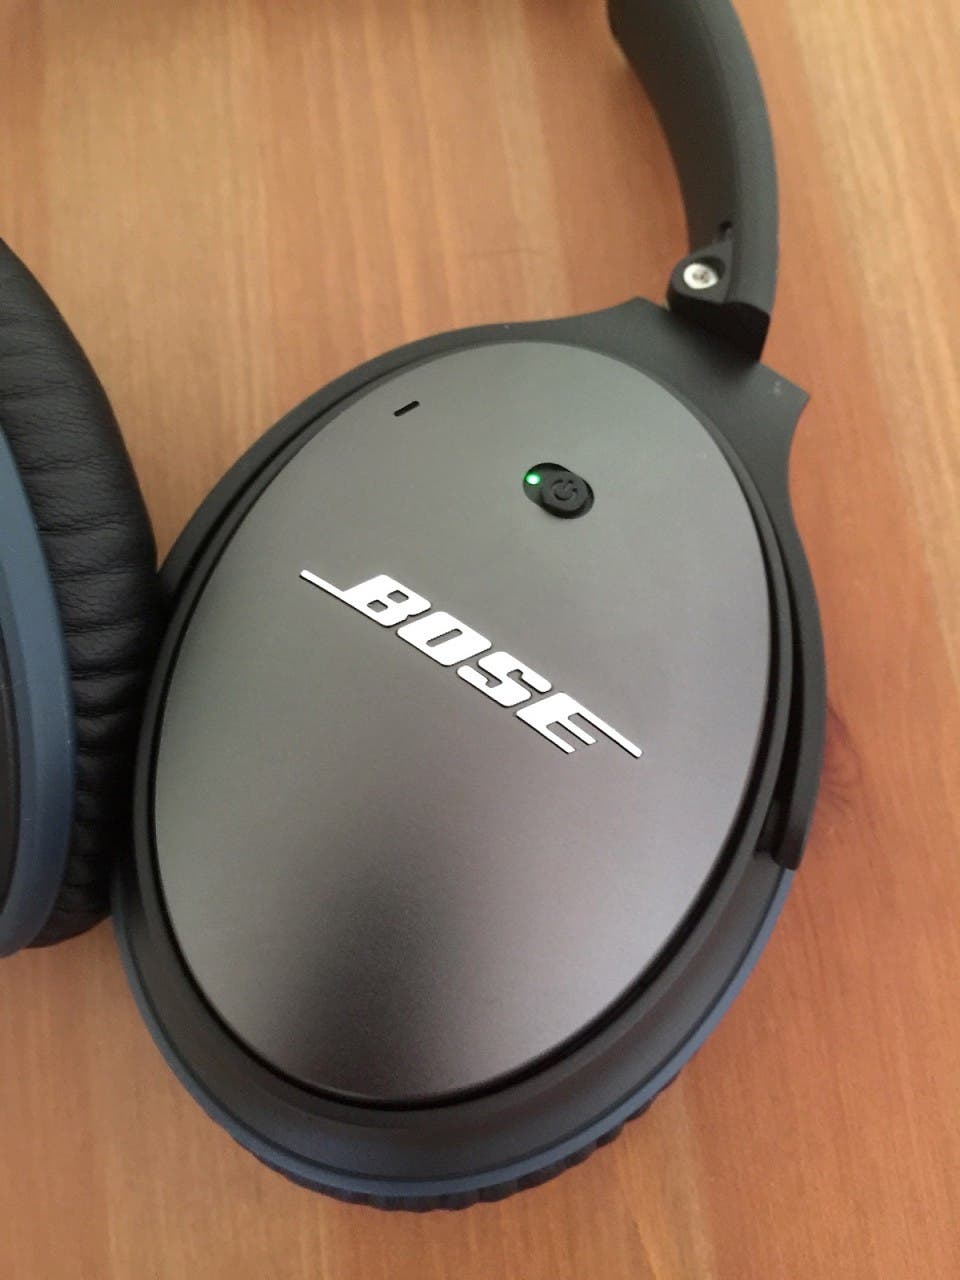 Bose Quiet Comfort 25 in sehr gutem Zustand + Bluetooth Adapter in